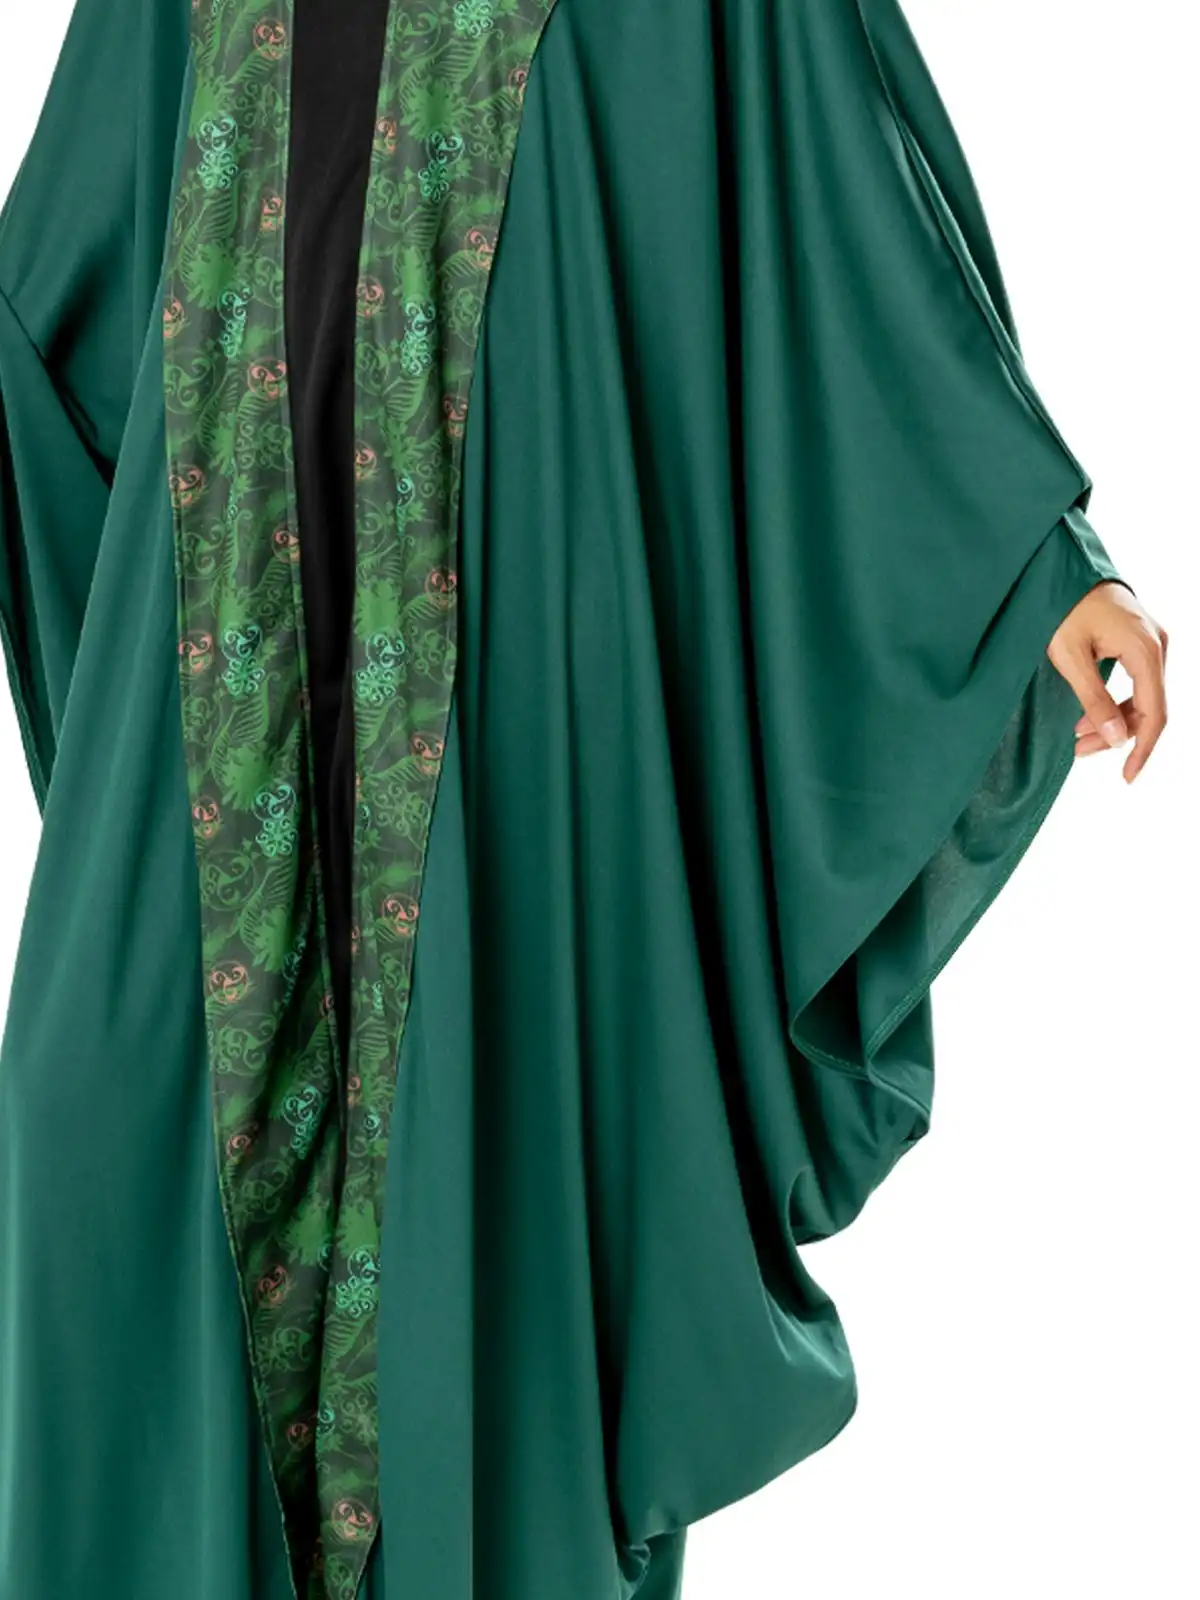 Harry Potter Hogwarts Professor Mcgonagall Adult Women Robe One Size w/Hat